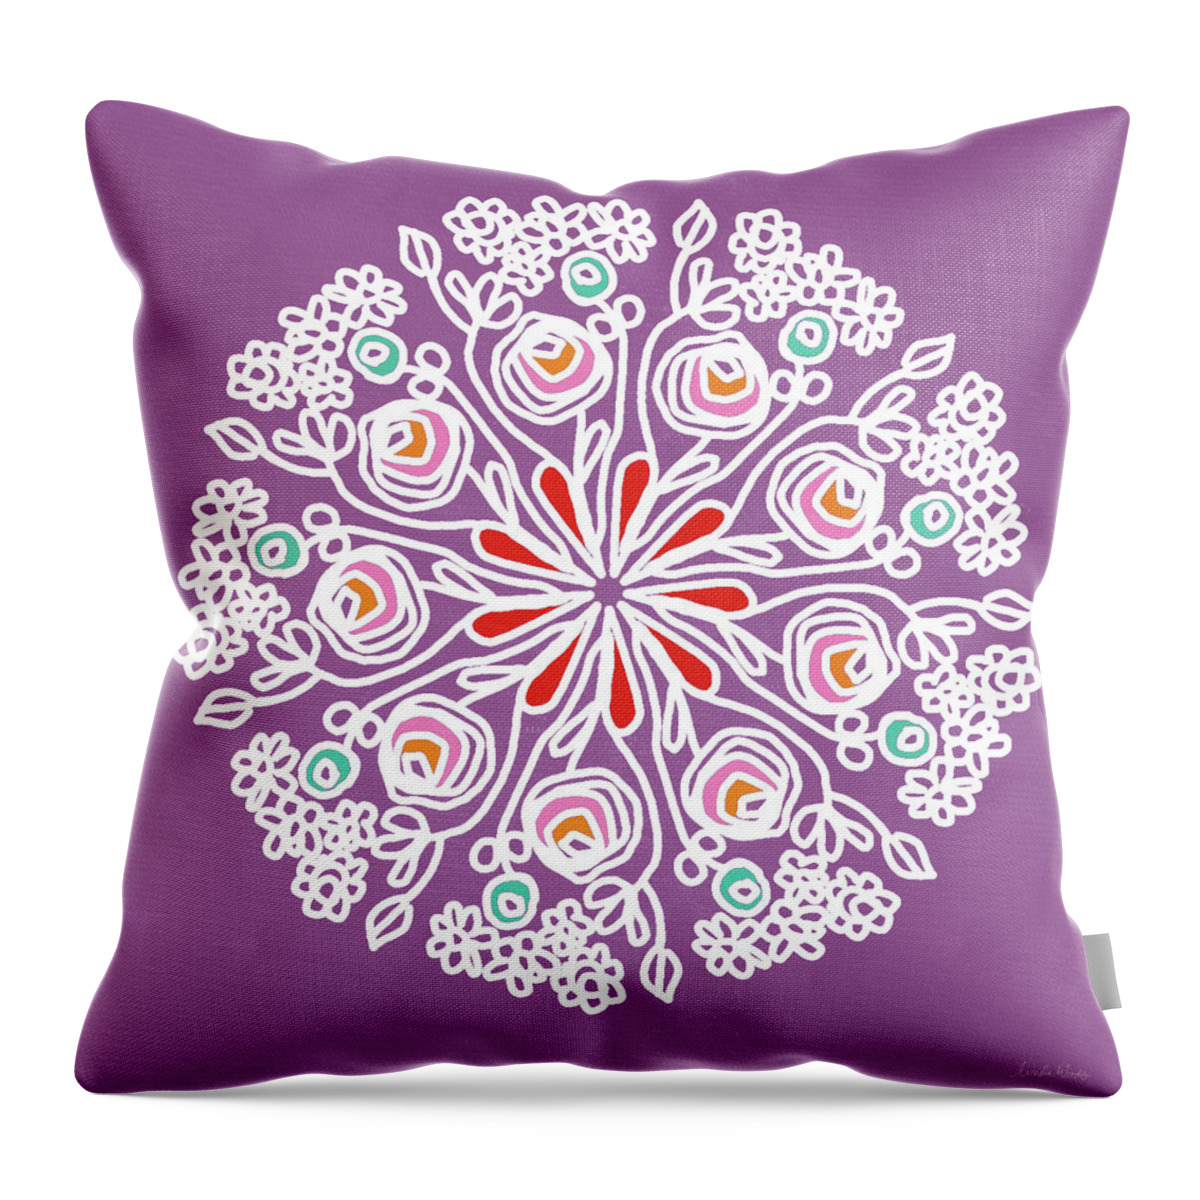 Rose Throw Pillow featuring the mixed media Rose Mandala 1- Art by Linda Woods by Linda Woods